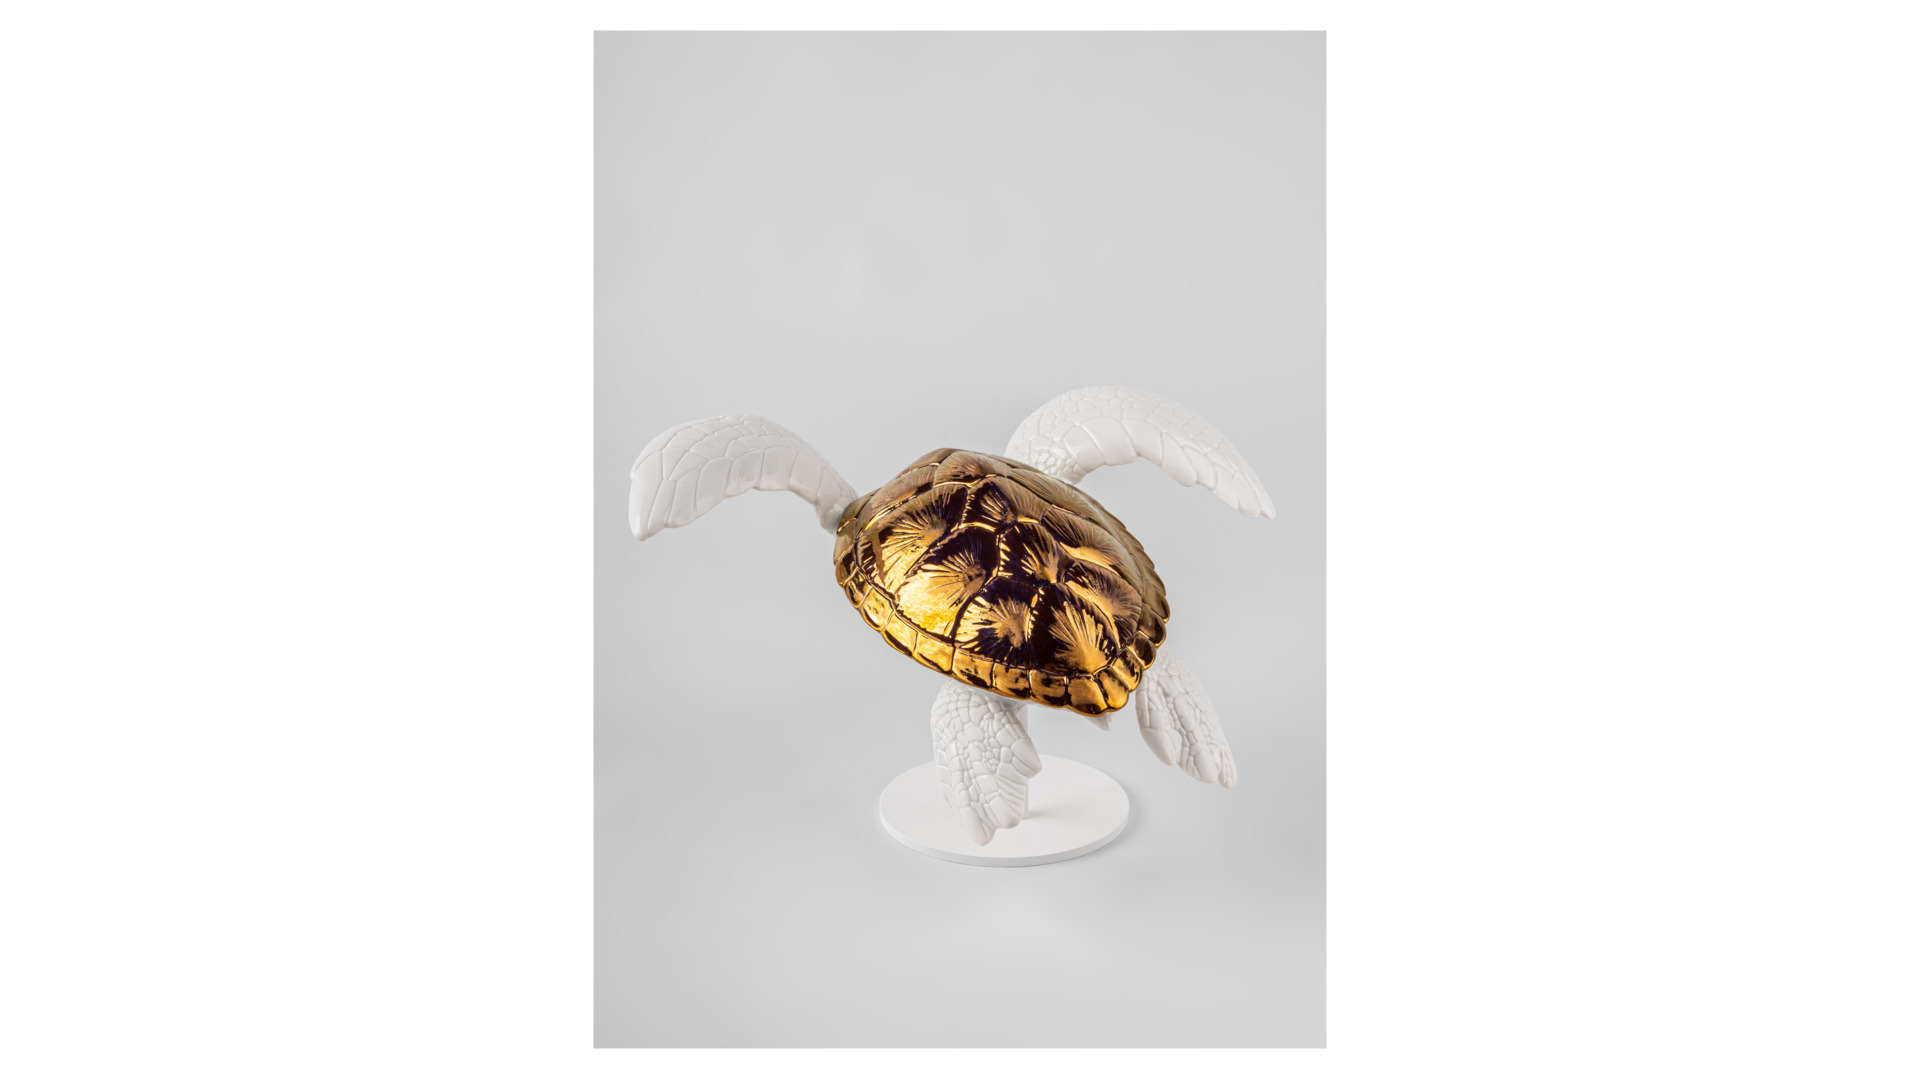 Фигурка Lladro Морская черепаха 24х33х19 см, фарфор, белая, медная